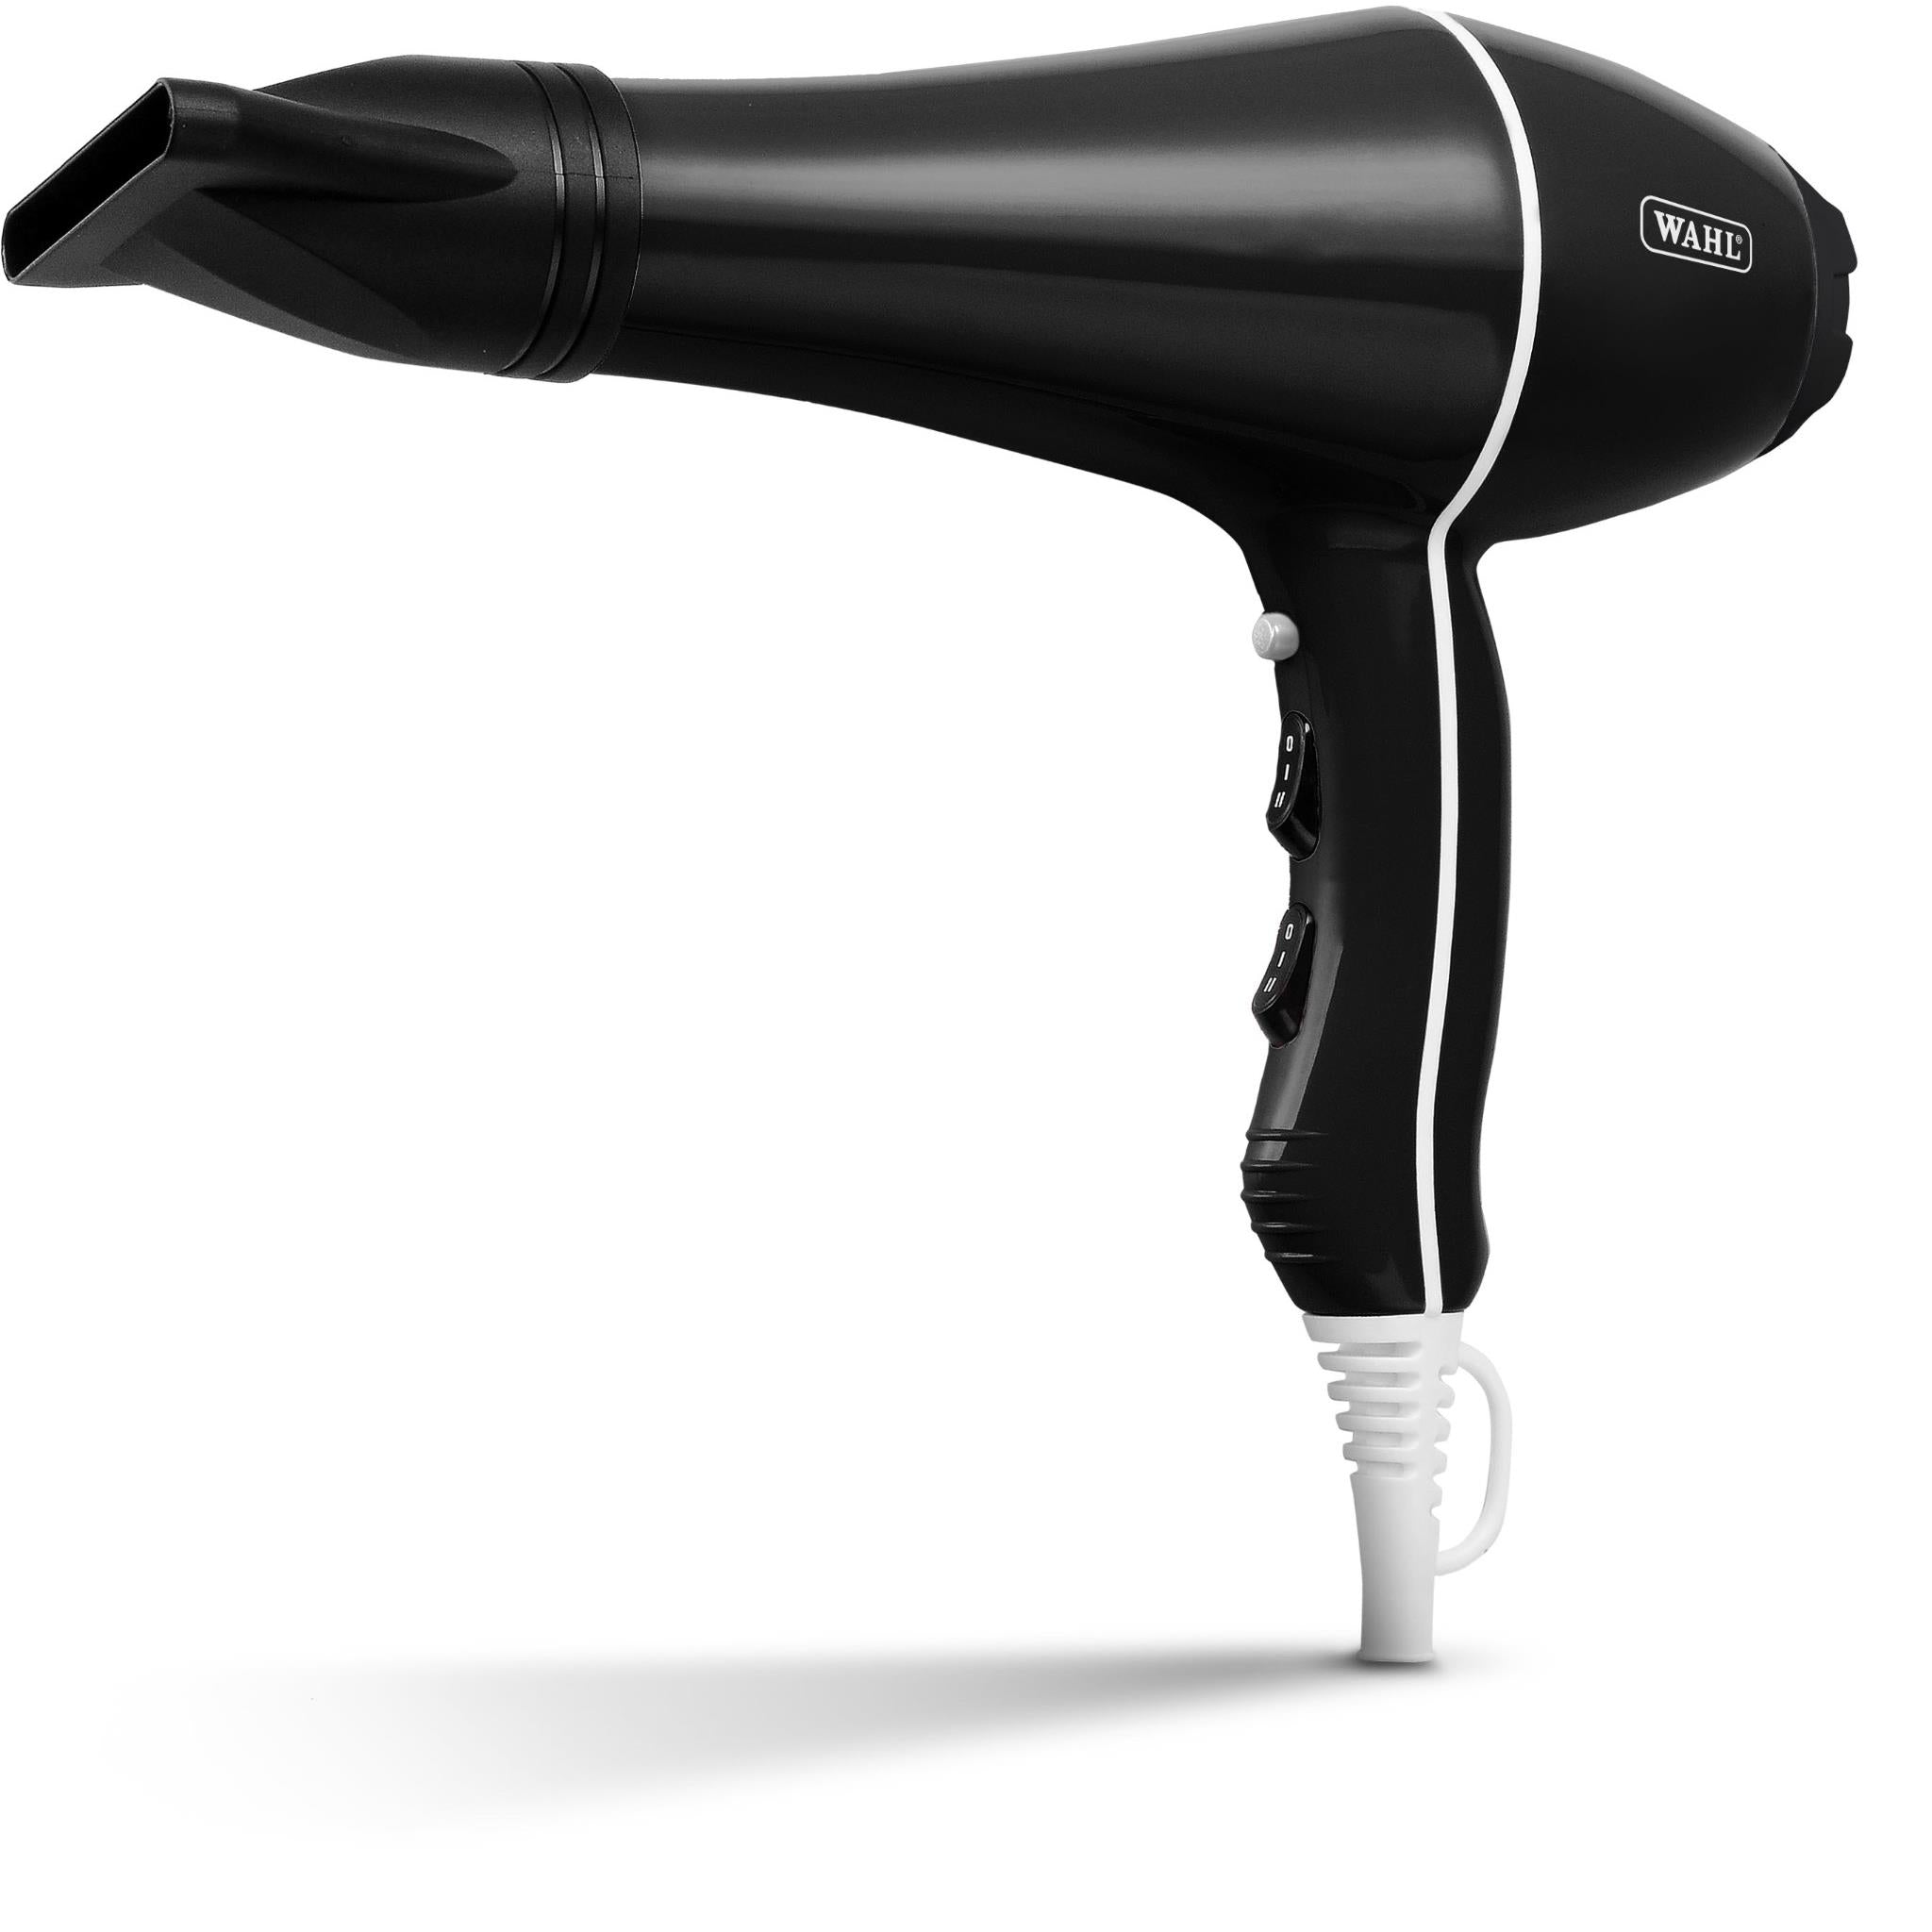 wahl designer dry hair dryer (black)